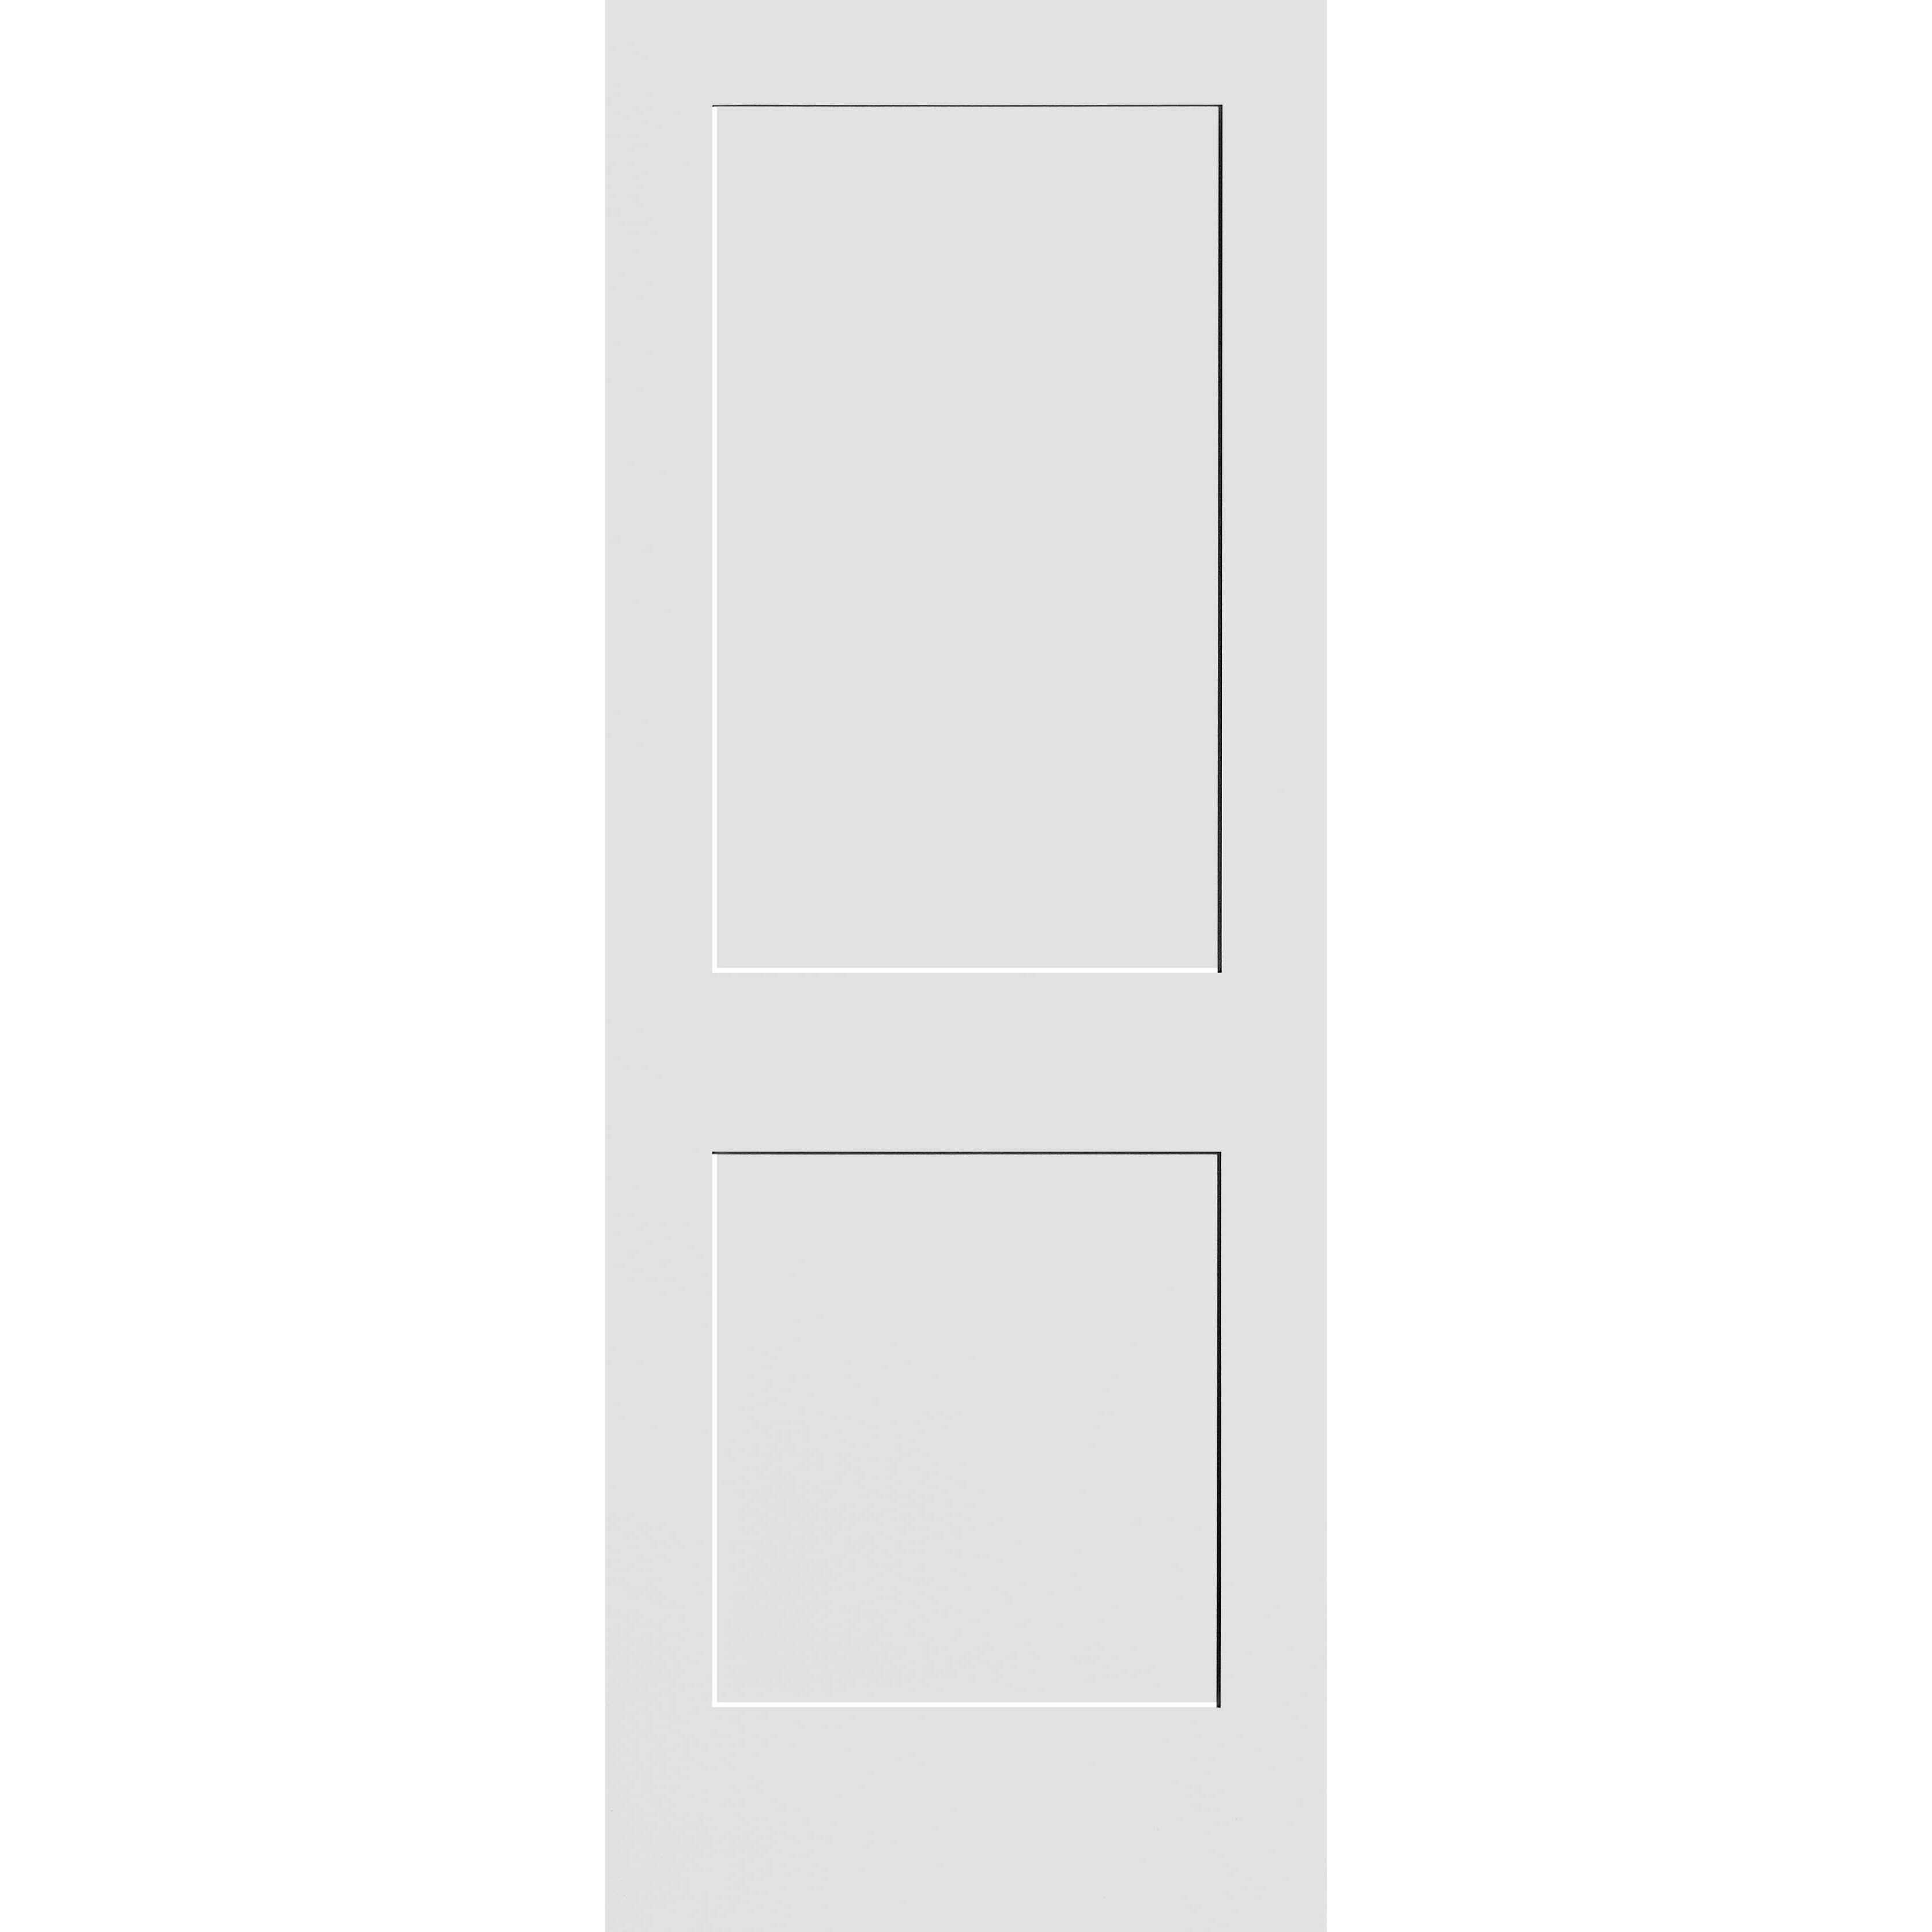 28X84 #8402 MDF PRIMED SHAKER PANEL INTERIOR DOOR 1-3/4 THICKNESS